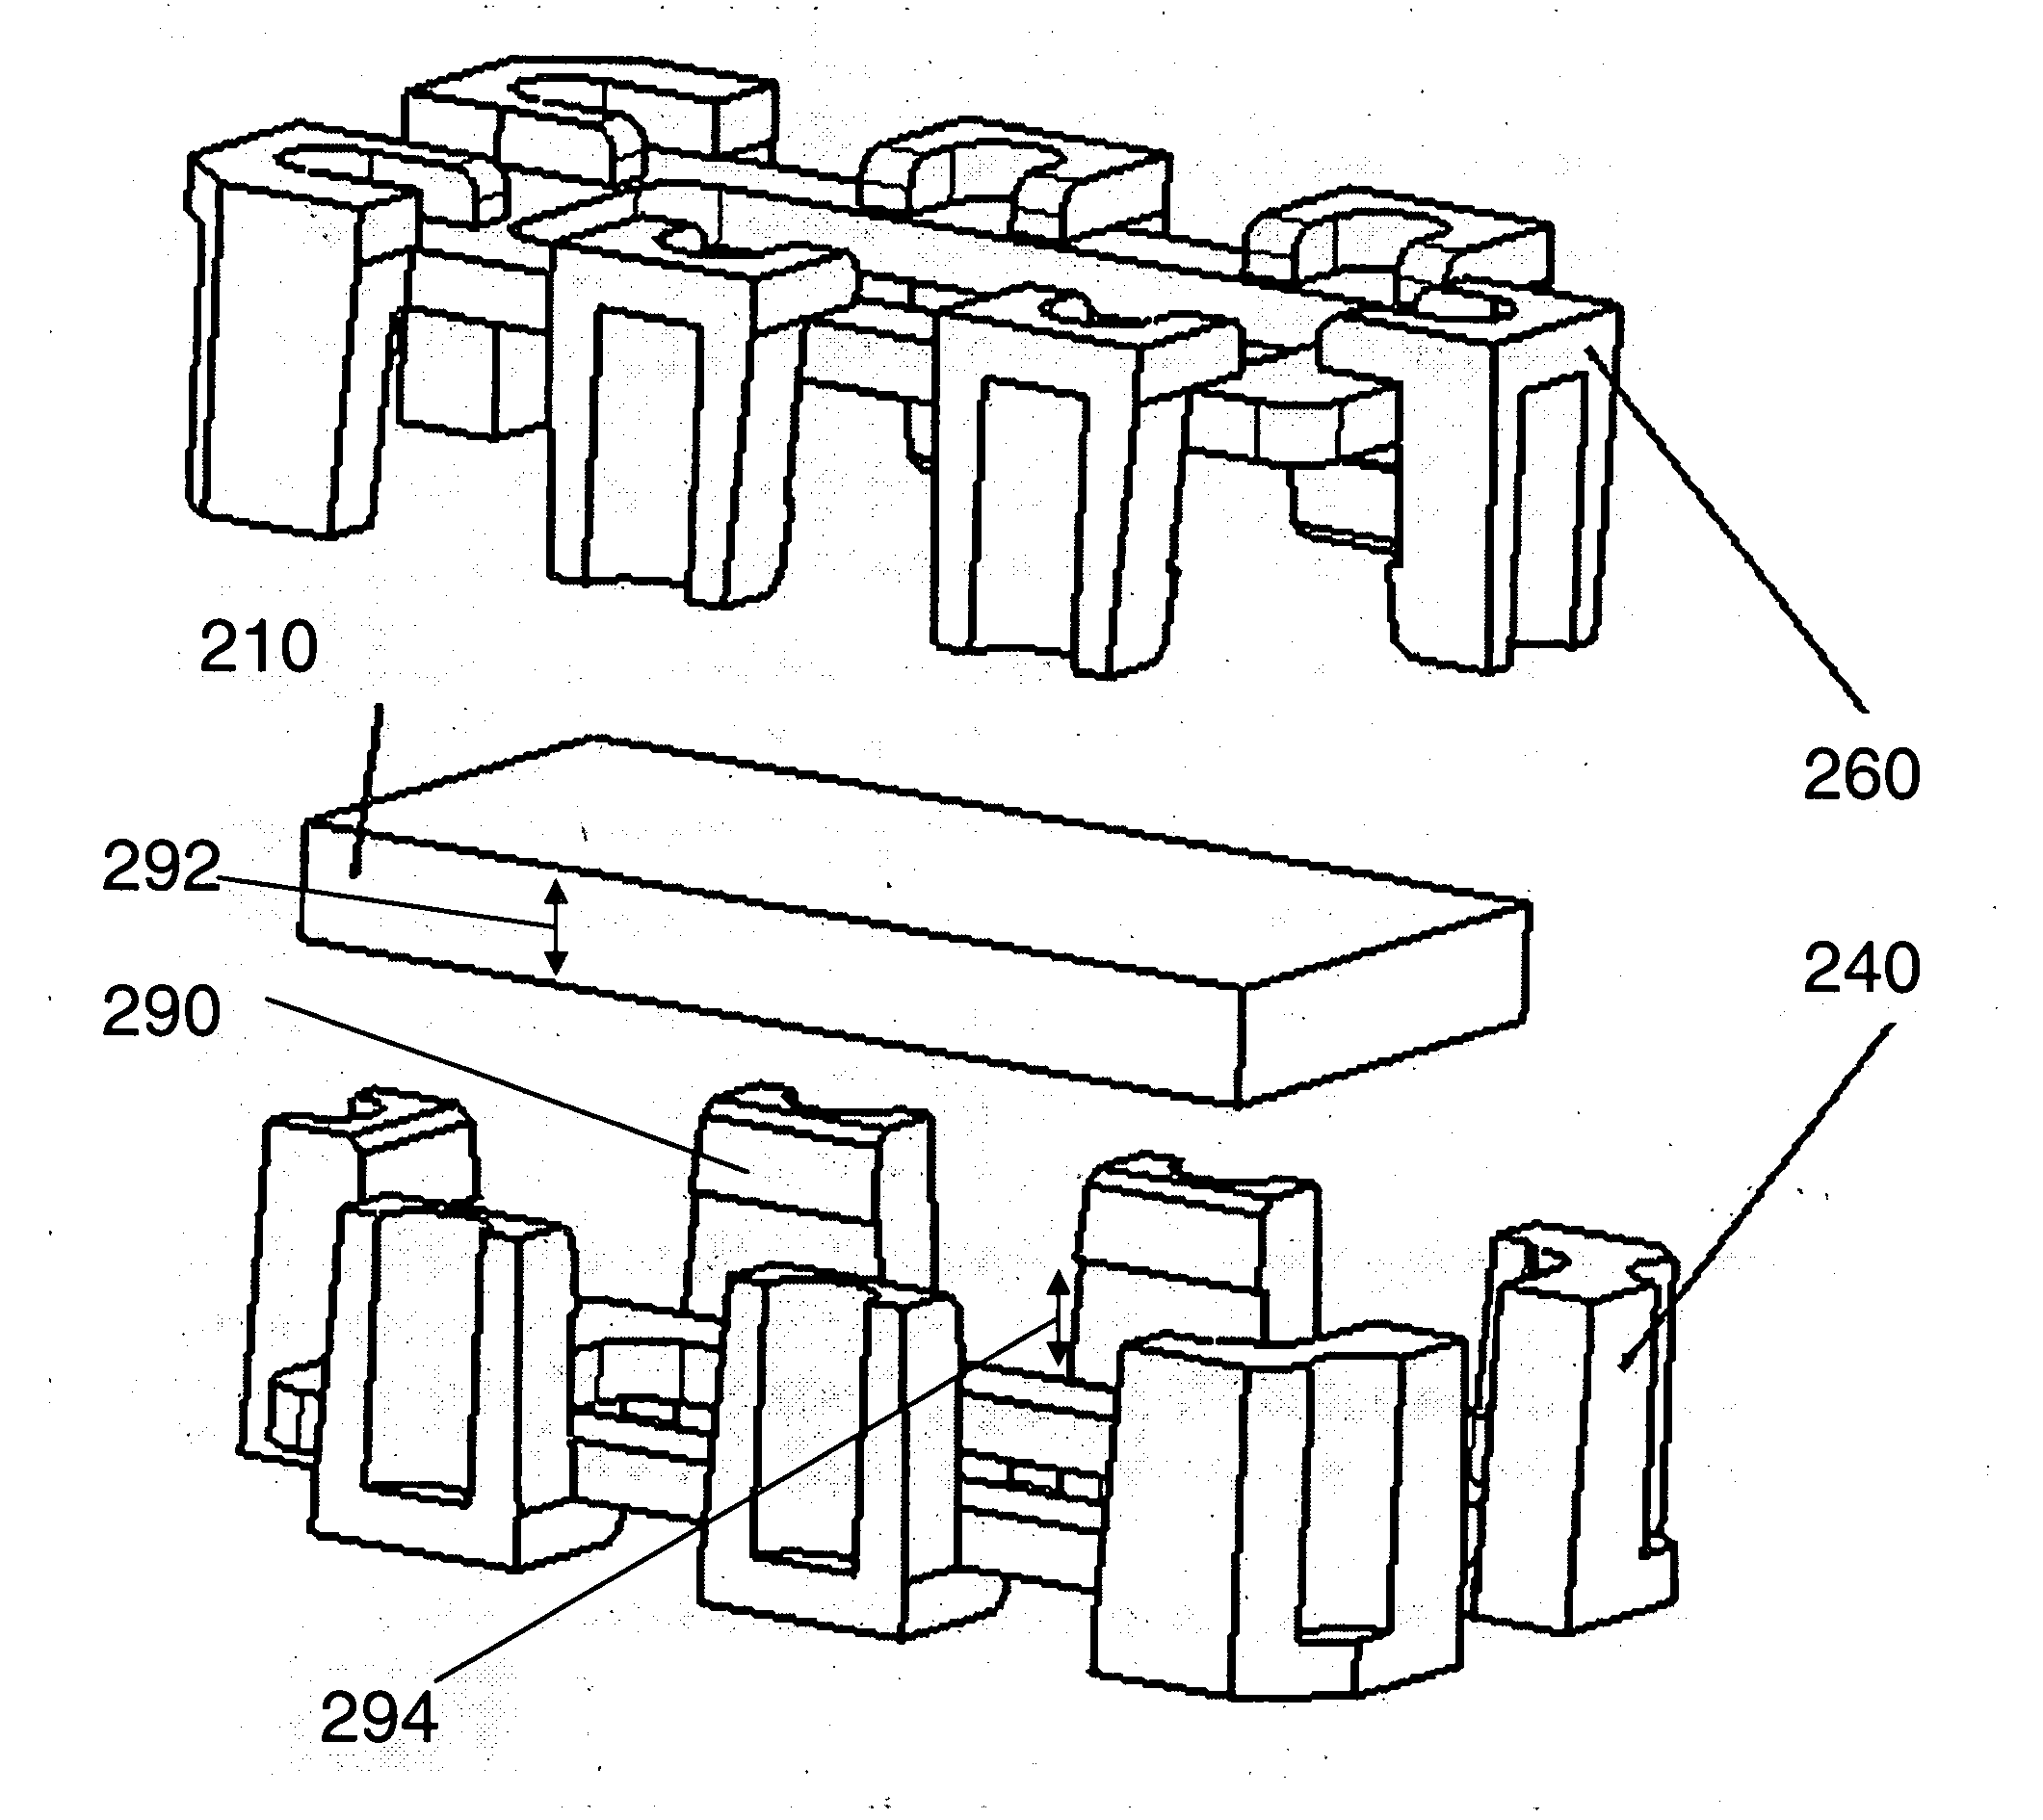 Flexible interlocking-column packaging assembly